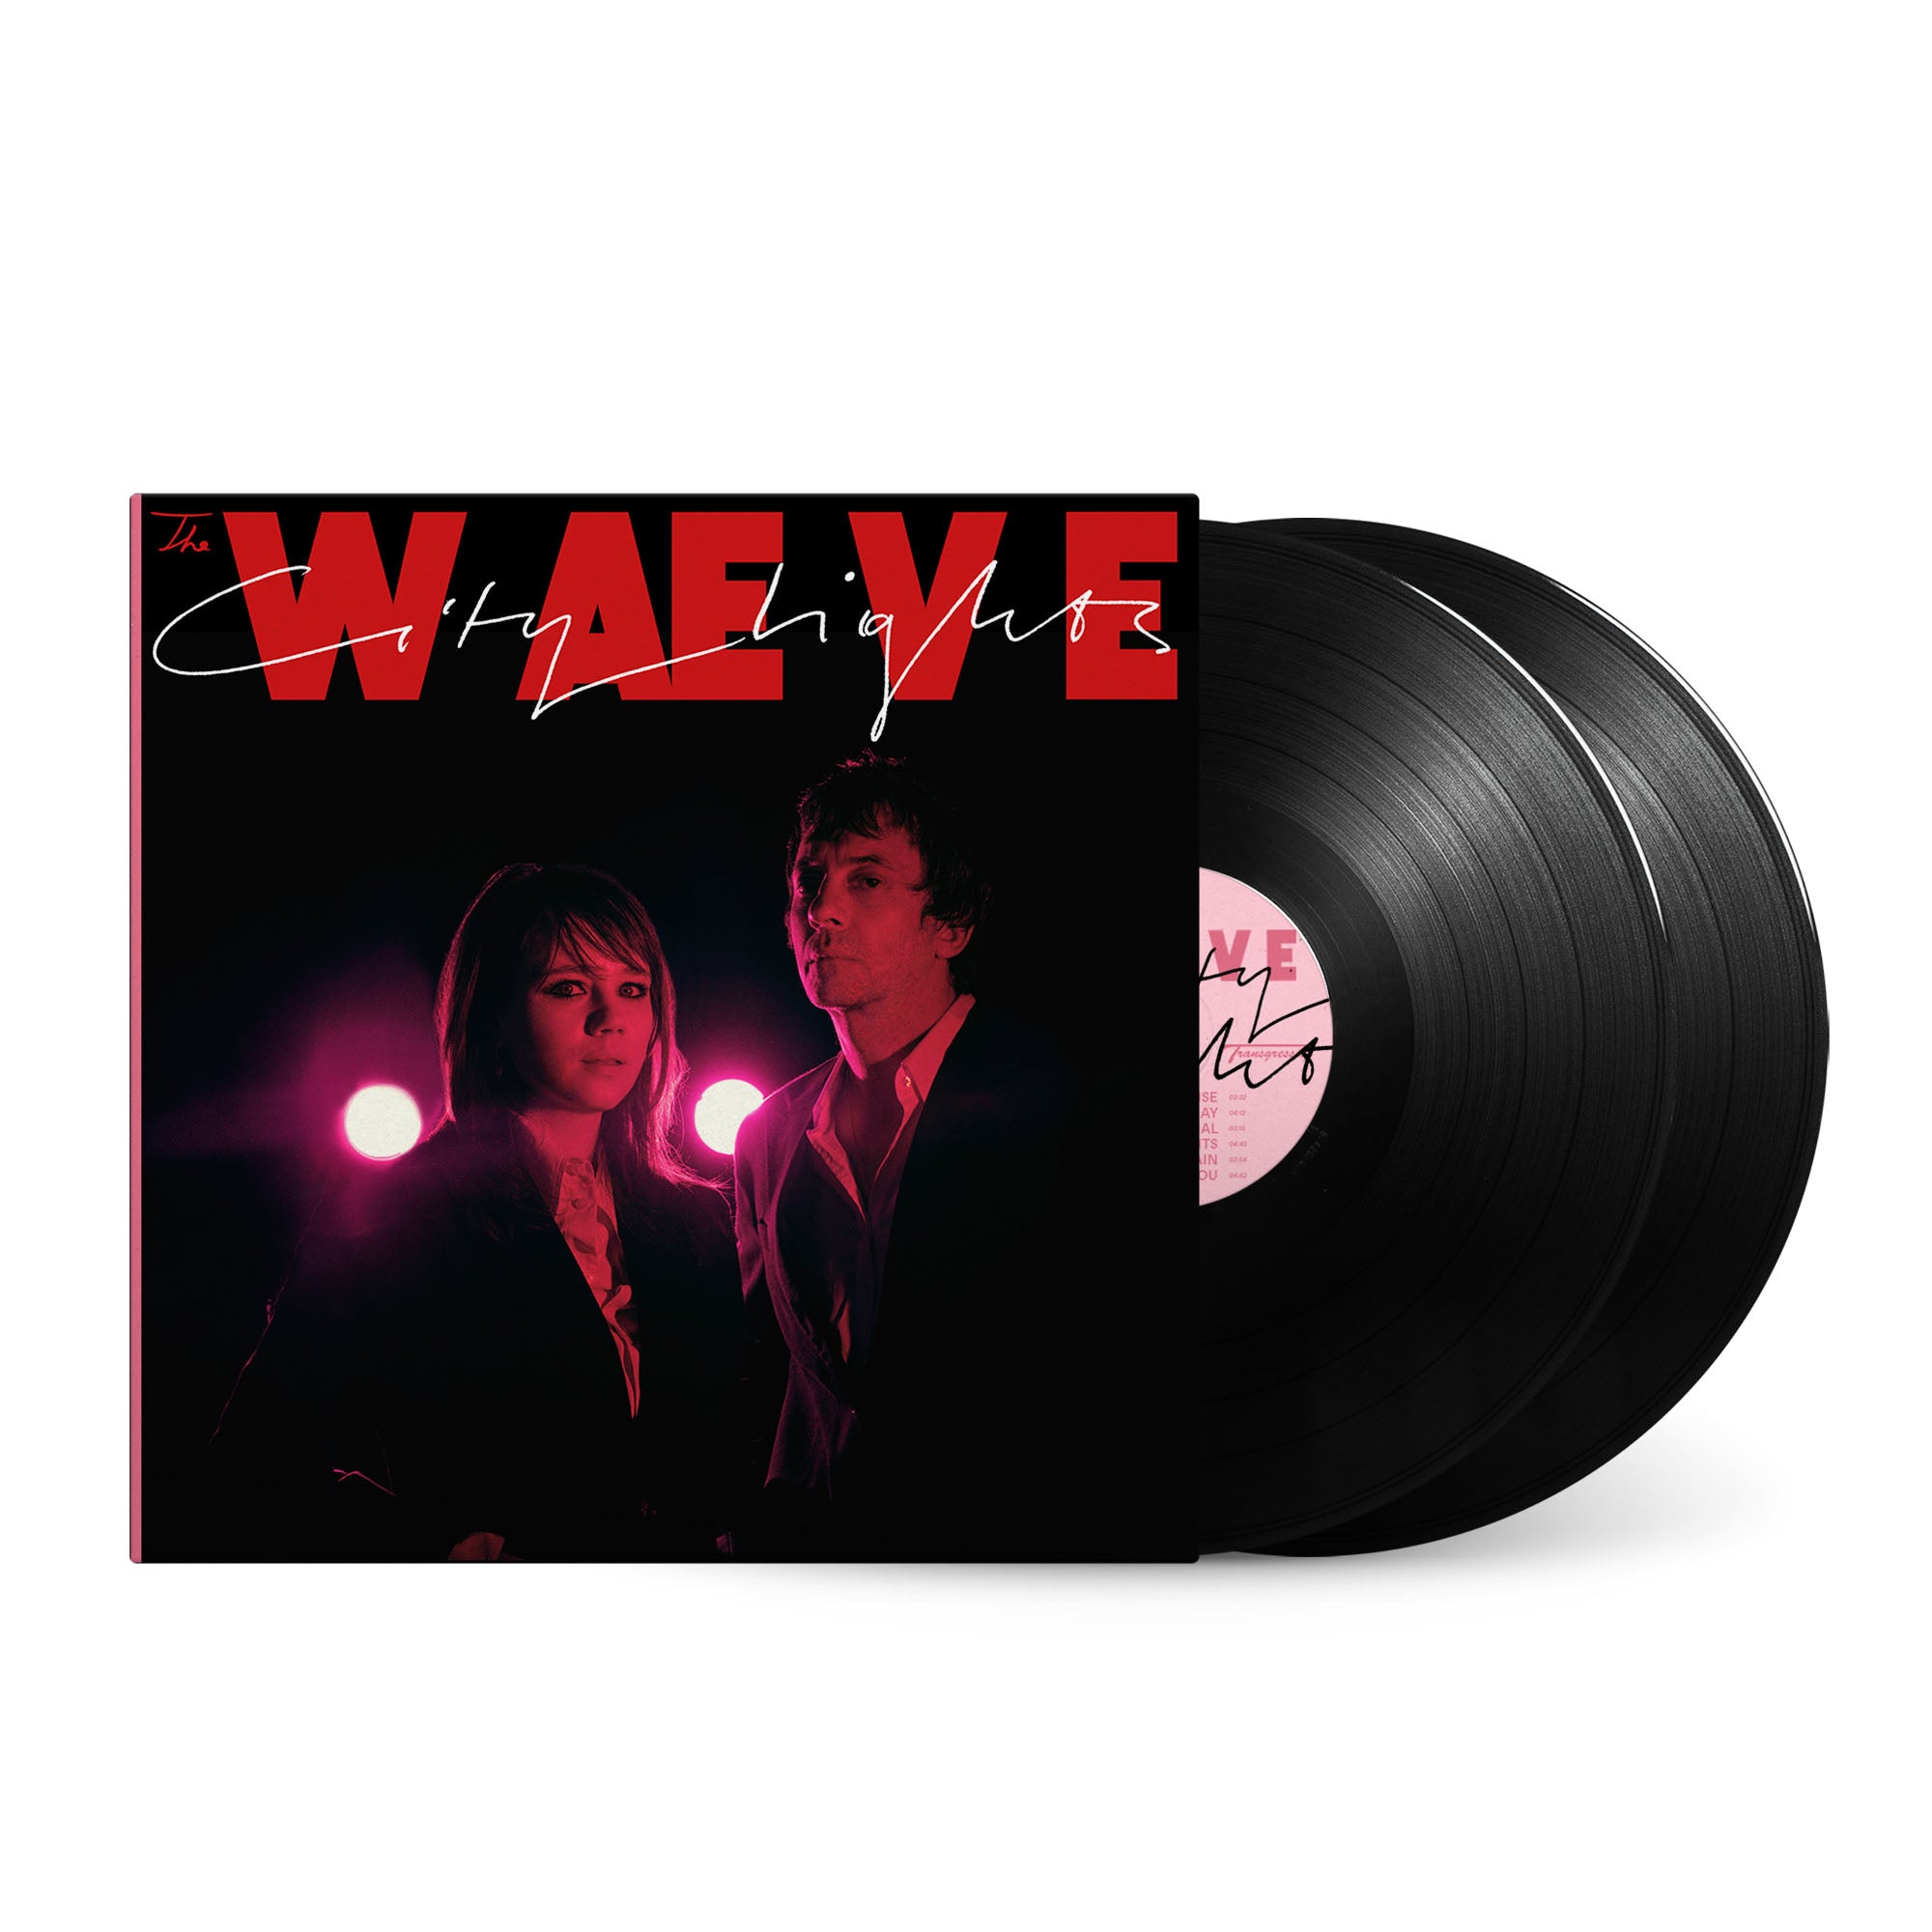 THE WAEVE (Graham Coxon and Rose Elinor Dougall) - City Lights: Vinyl 2LP